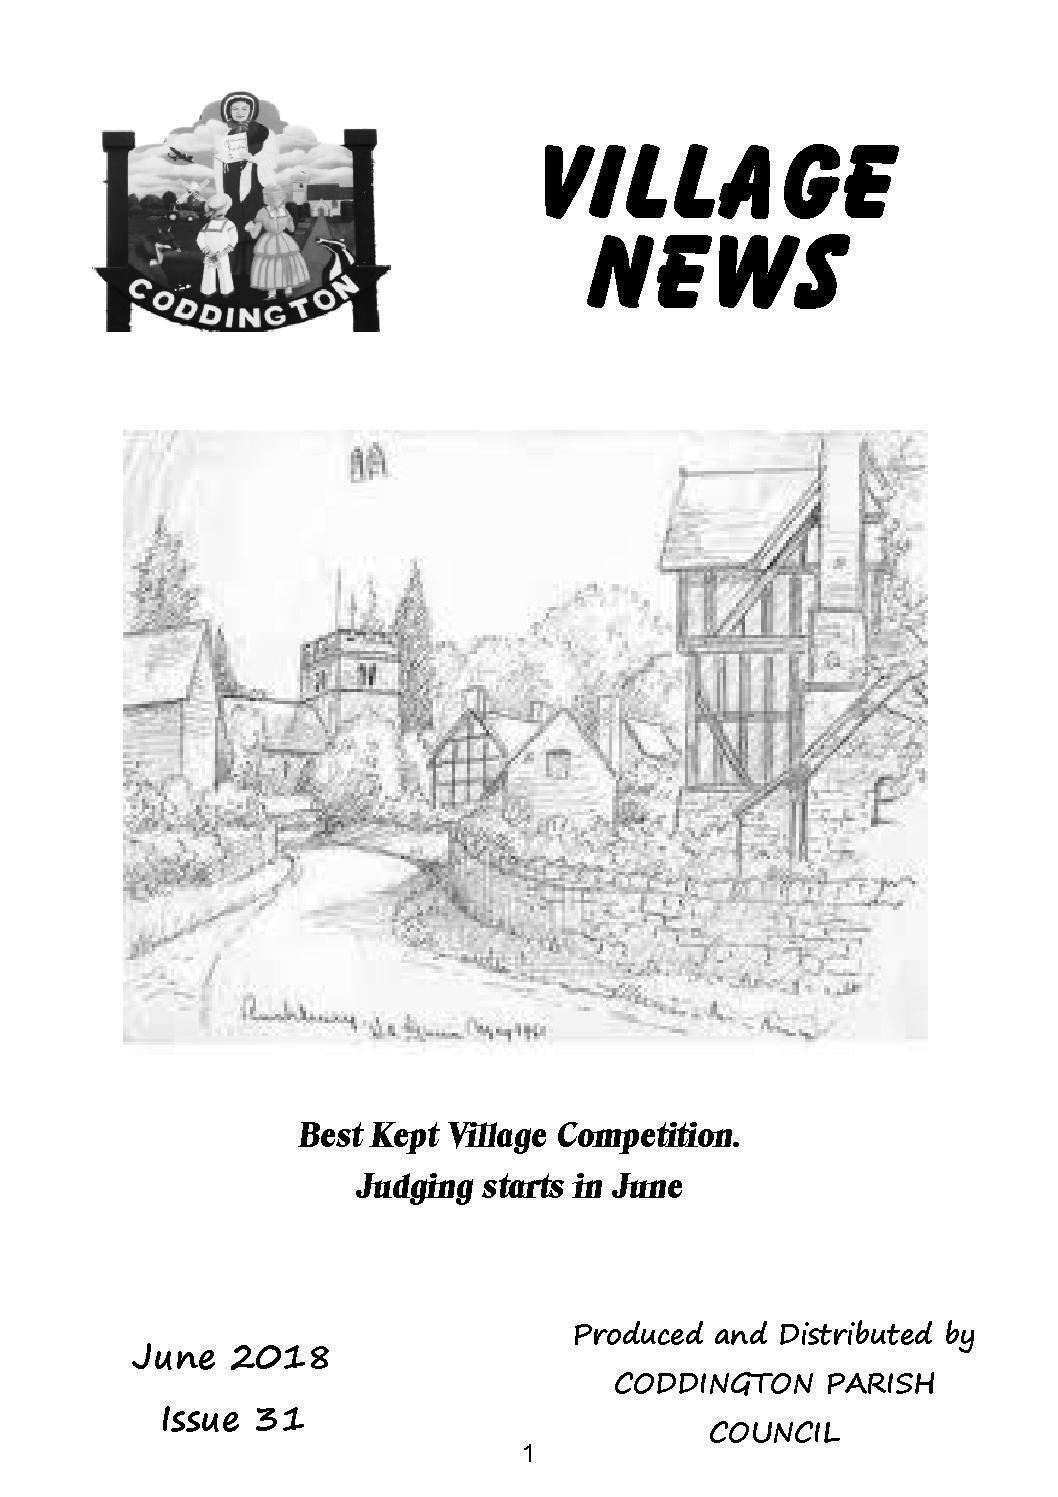 Coddington Village News - June 2018